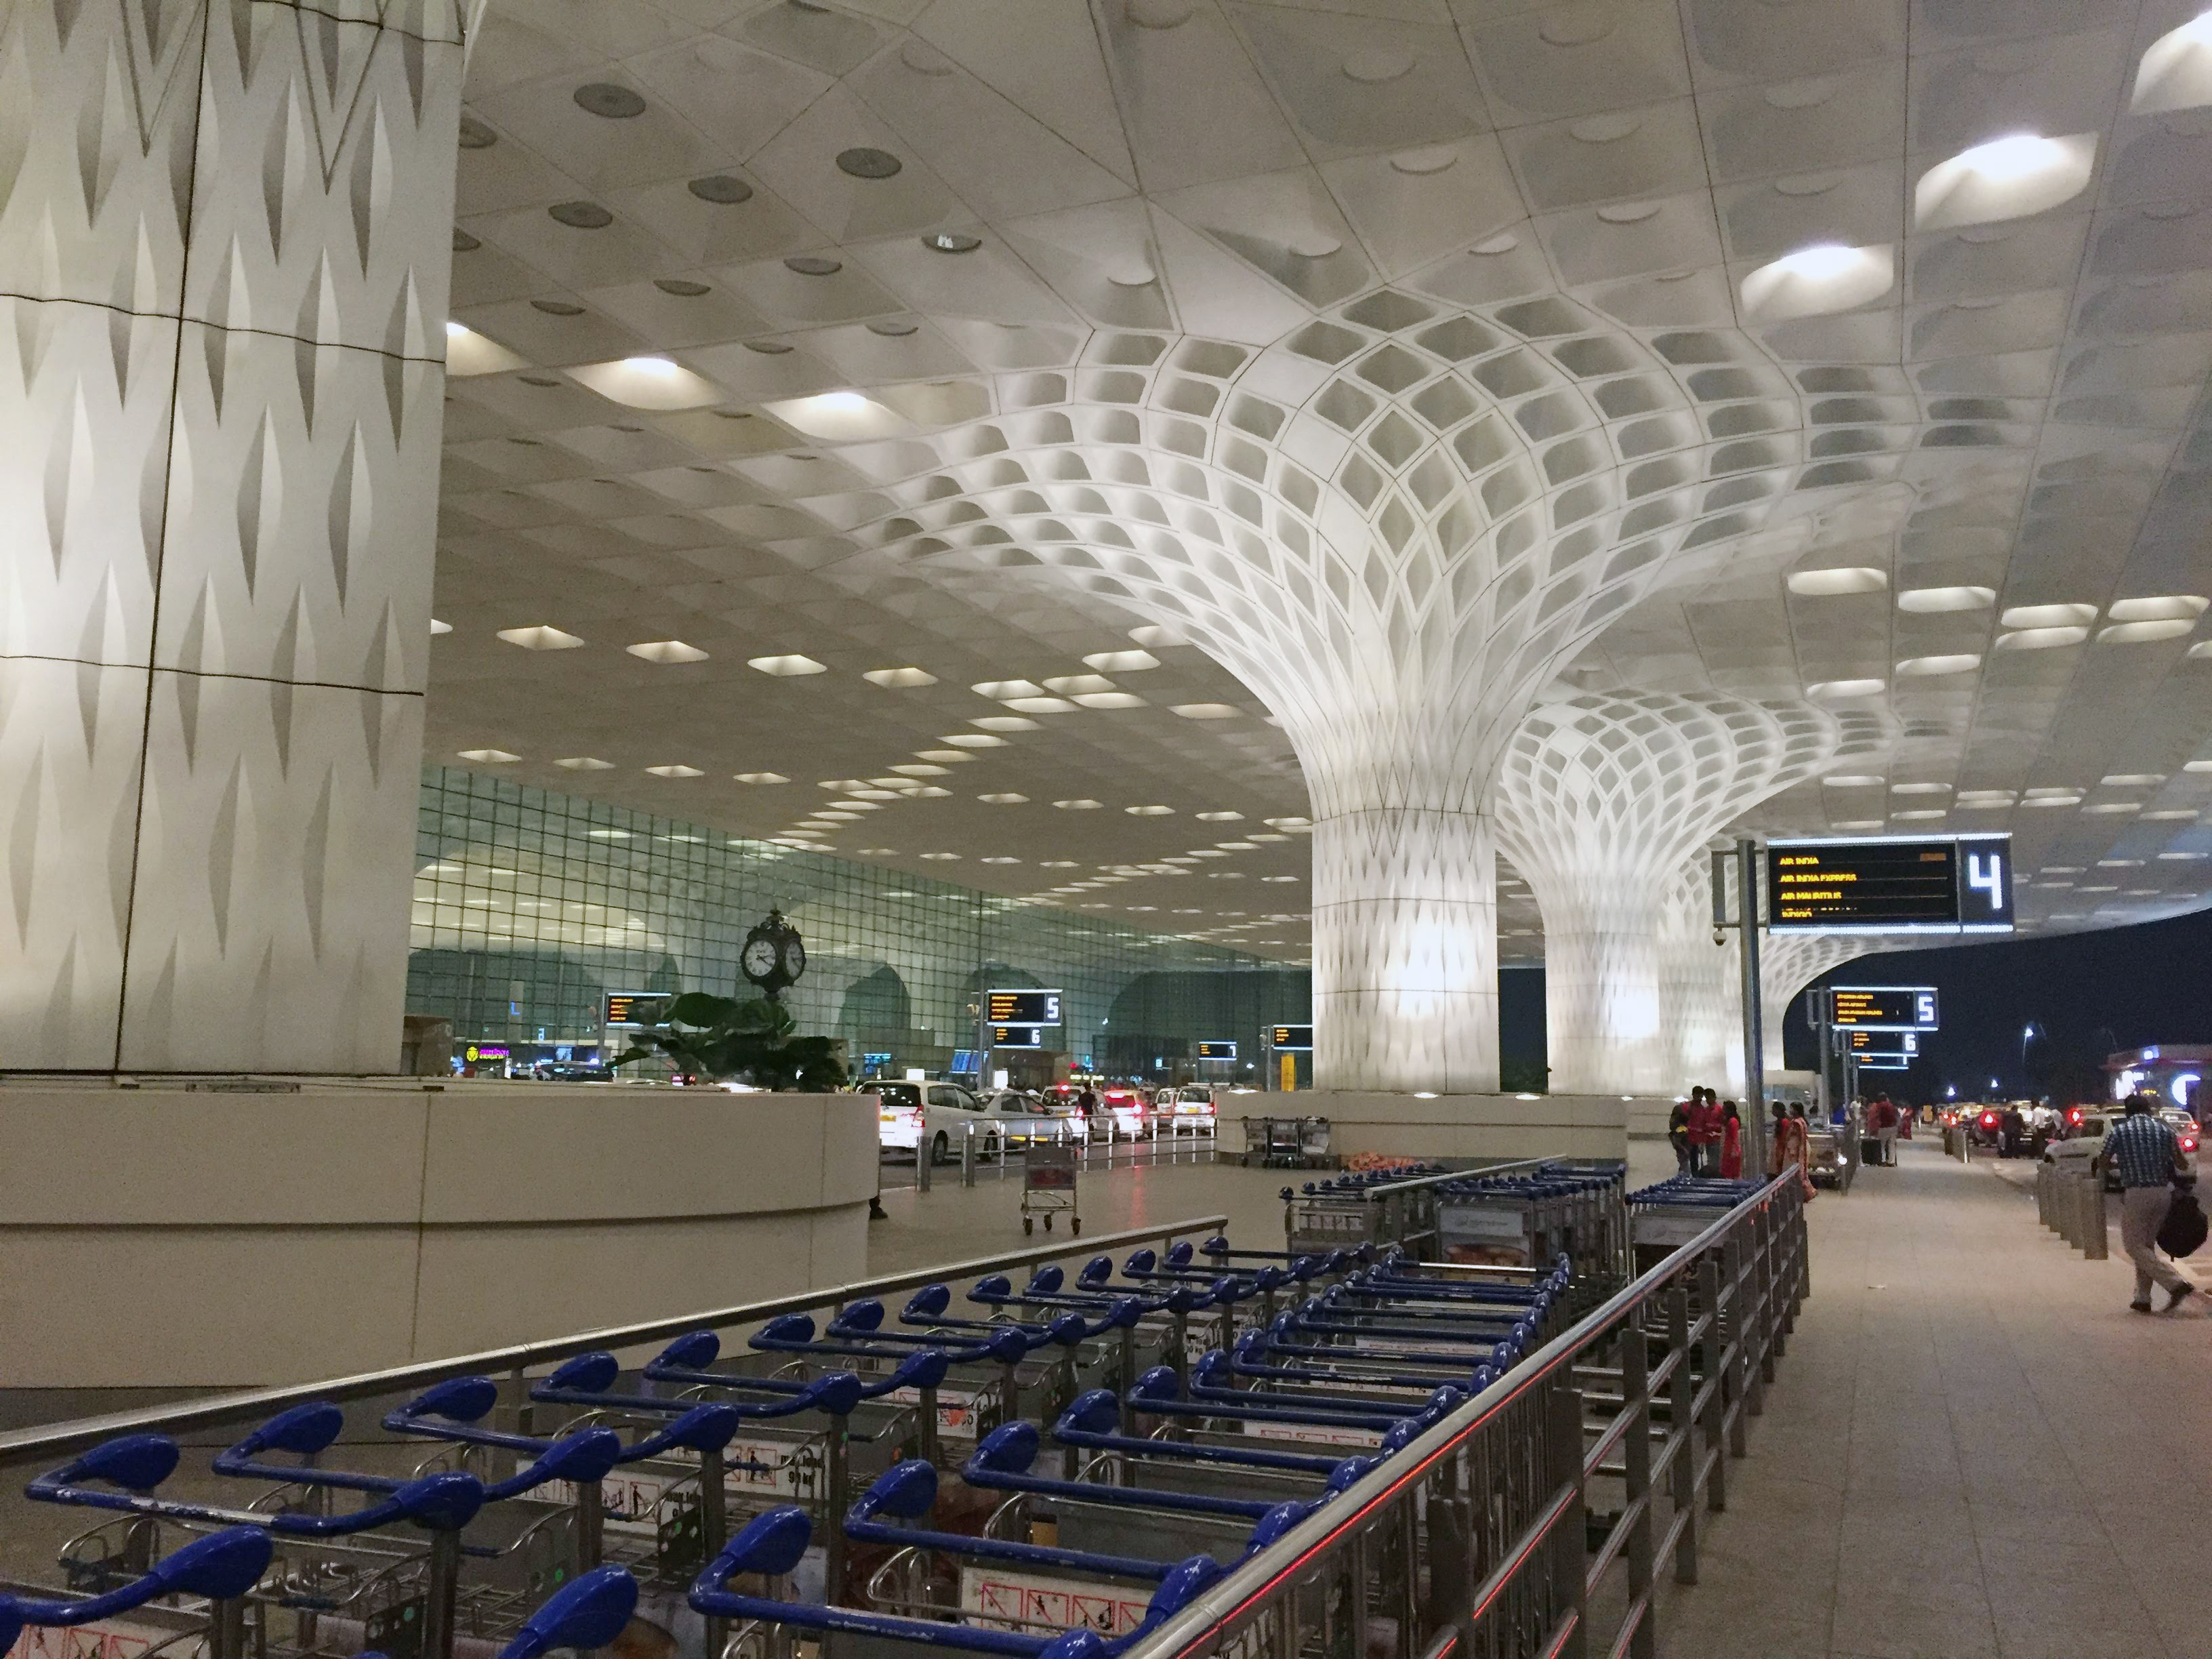 Chhatrapati Shivaji International Airport in Mumbai, India